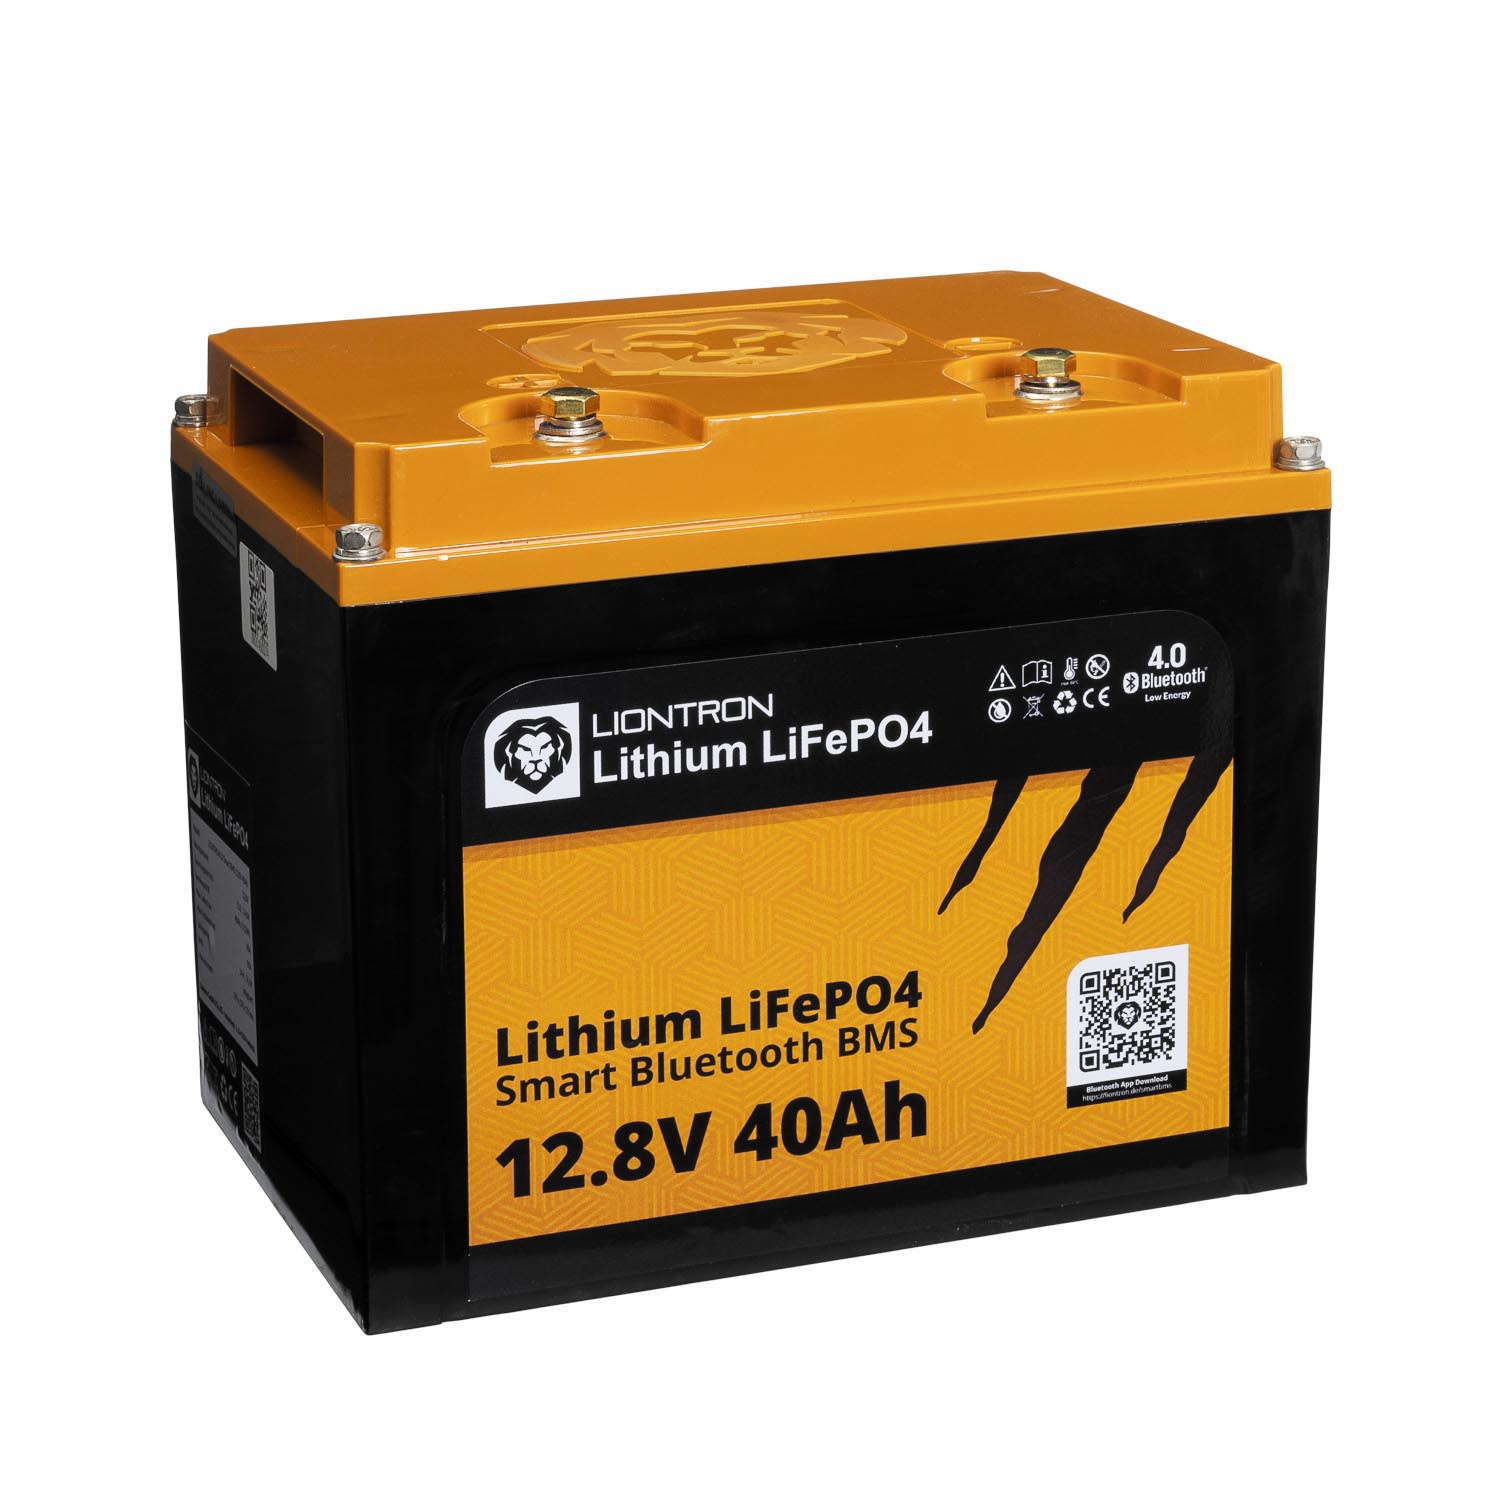 Liontron 40Ah 12V LiFePO4 Lithium Batterie Wohnmobil BMS mit App  (USt-befreit nach §12 Abs.3 Nr. 1 S.1 UStG), 0% MwSt.